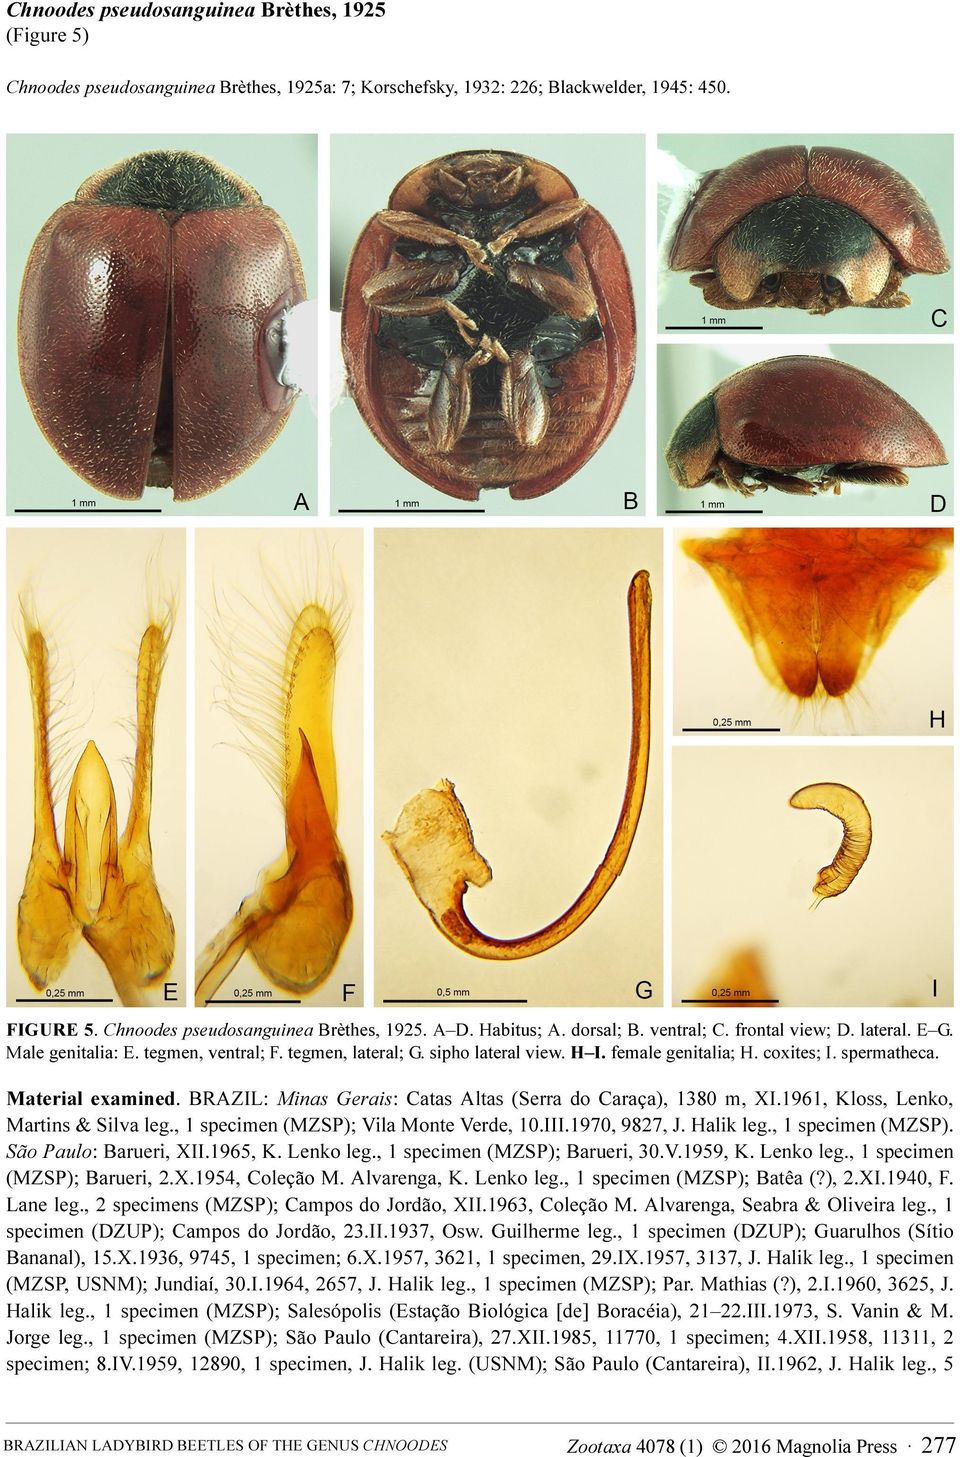 Material examined. BRAZIL: Minas Gerais: Catas Altas (Serra do Caraça), 1380 m, XI.1961, Kloss, Lenko, Martins & Silva leg., 1 specimen (MZSP); Vila Monte Verde, 10.III.1970, 9827, J. Halik leg.